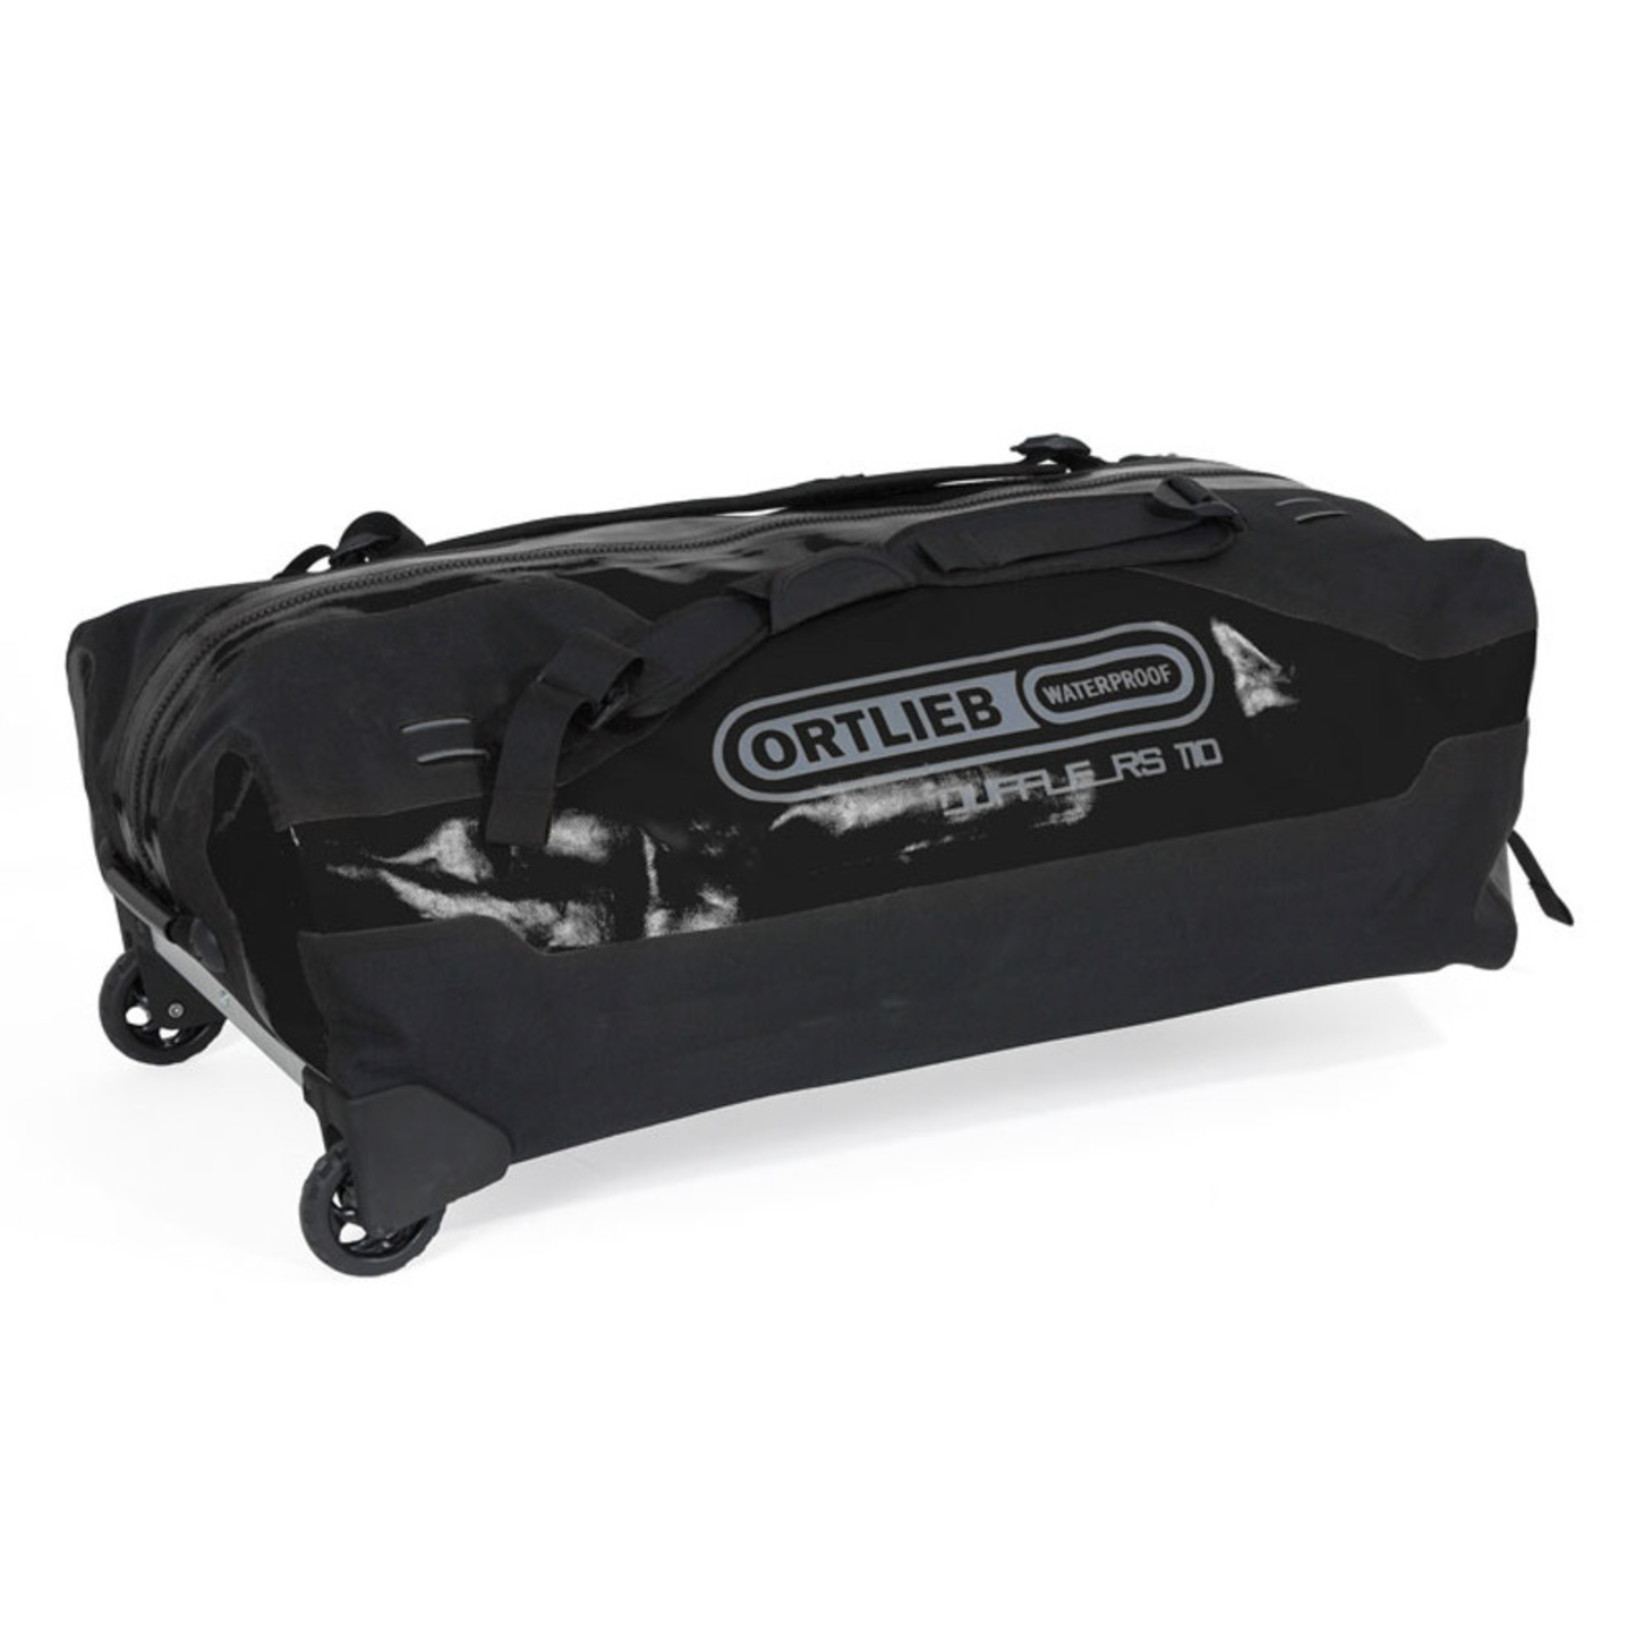 Ortlieb New Ortlieb Duffle RS Bag K13101 - 110L Black Waterproof Mesh Outside Pocket